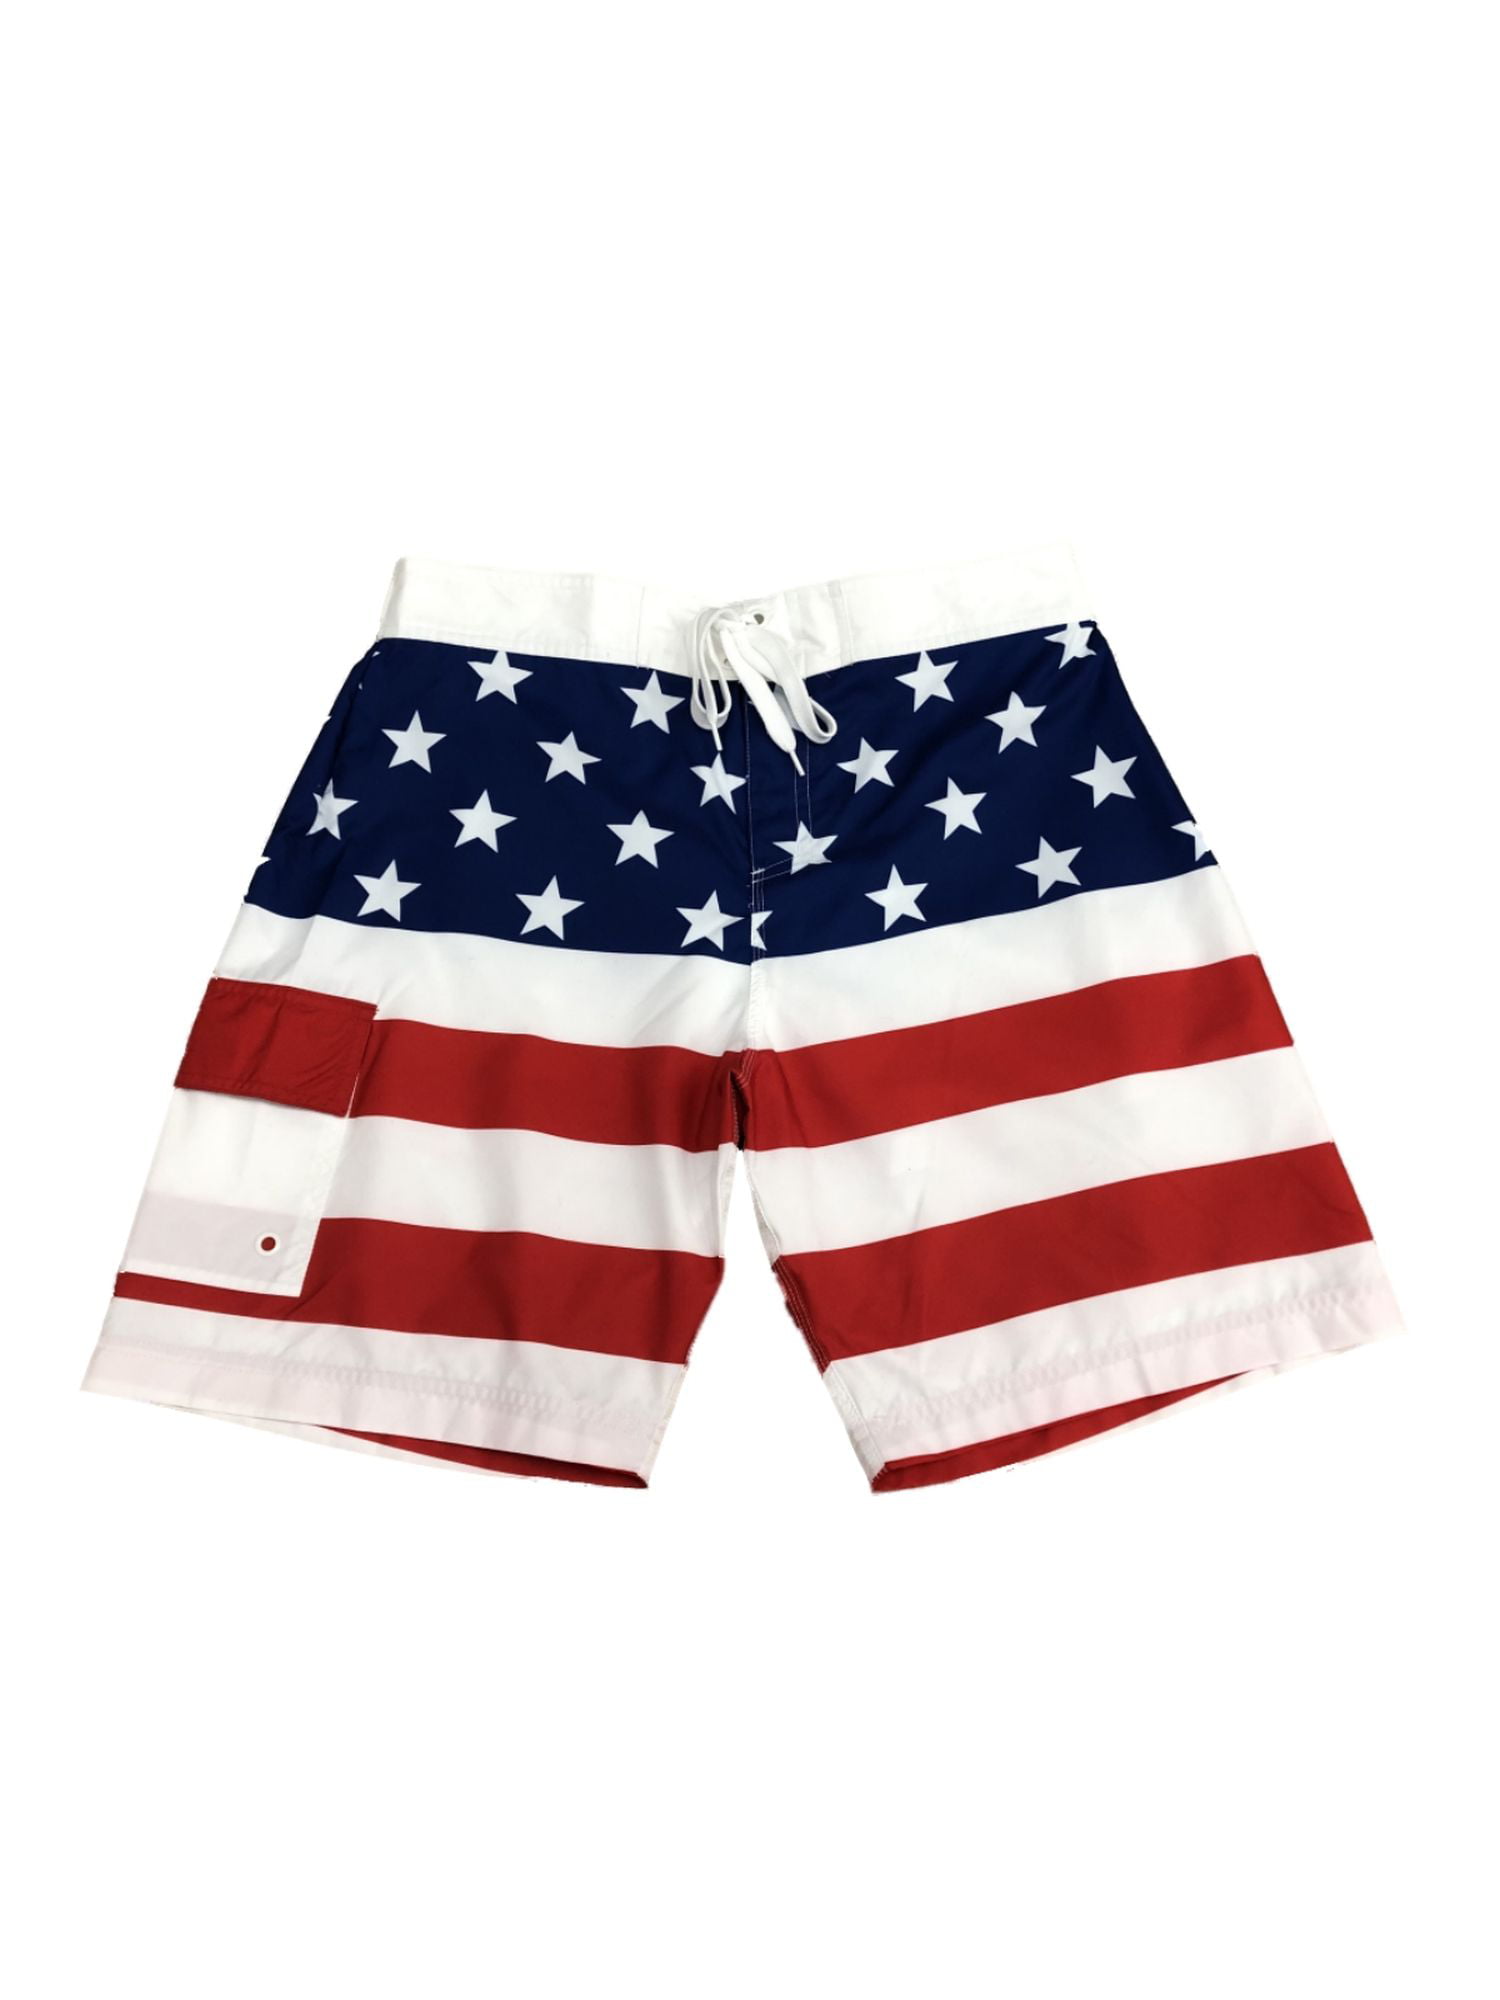 NWT Gymboree USA Patriotic American Flag Stars & Stripes Swim Trunks Shorts 12 